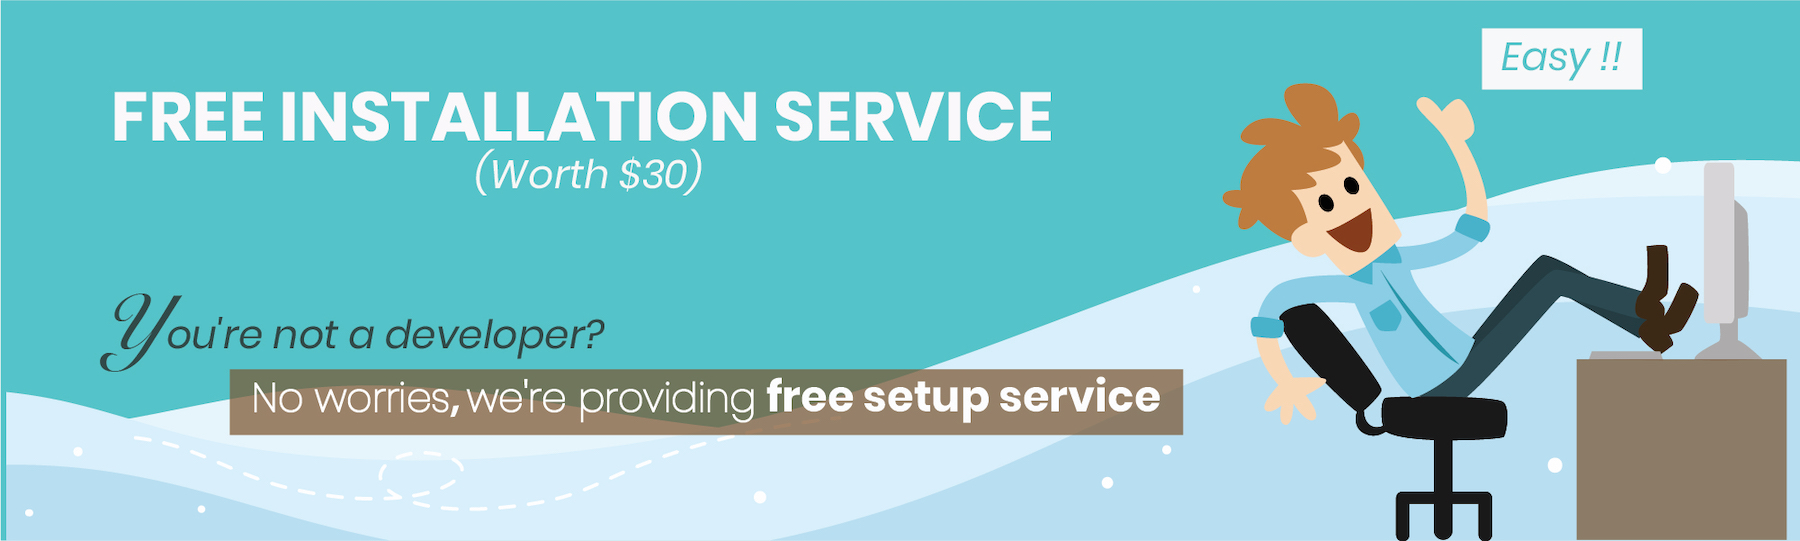 Free installation service